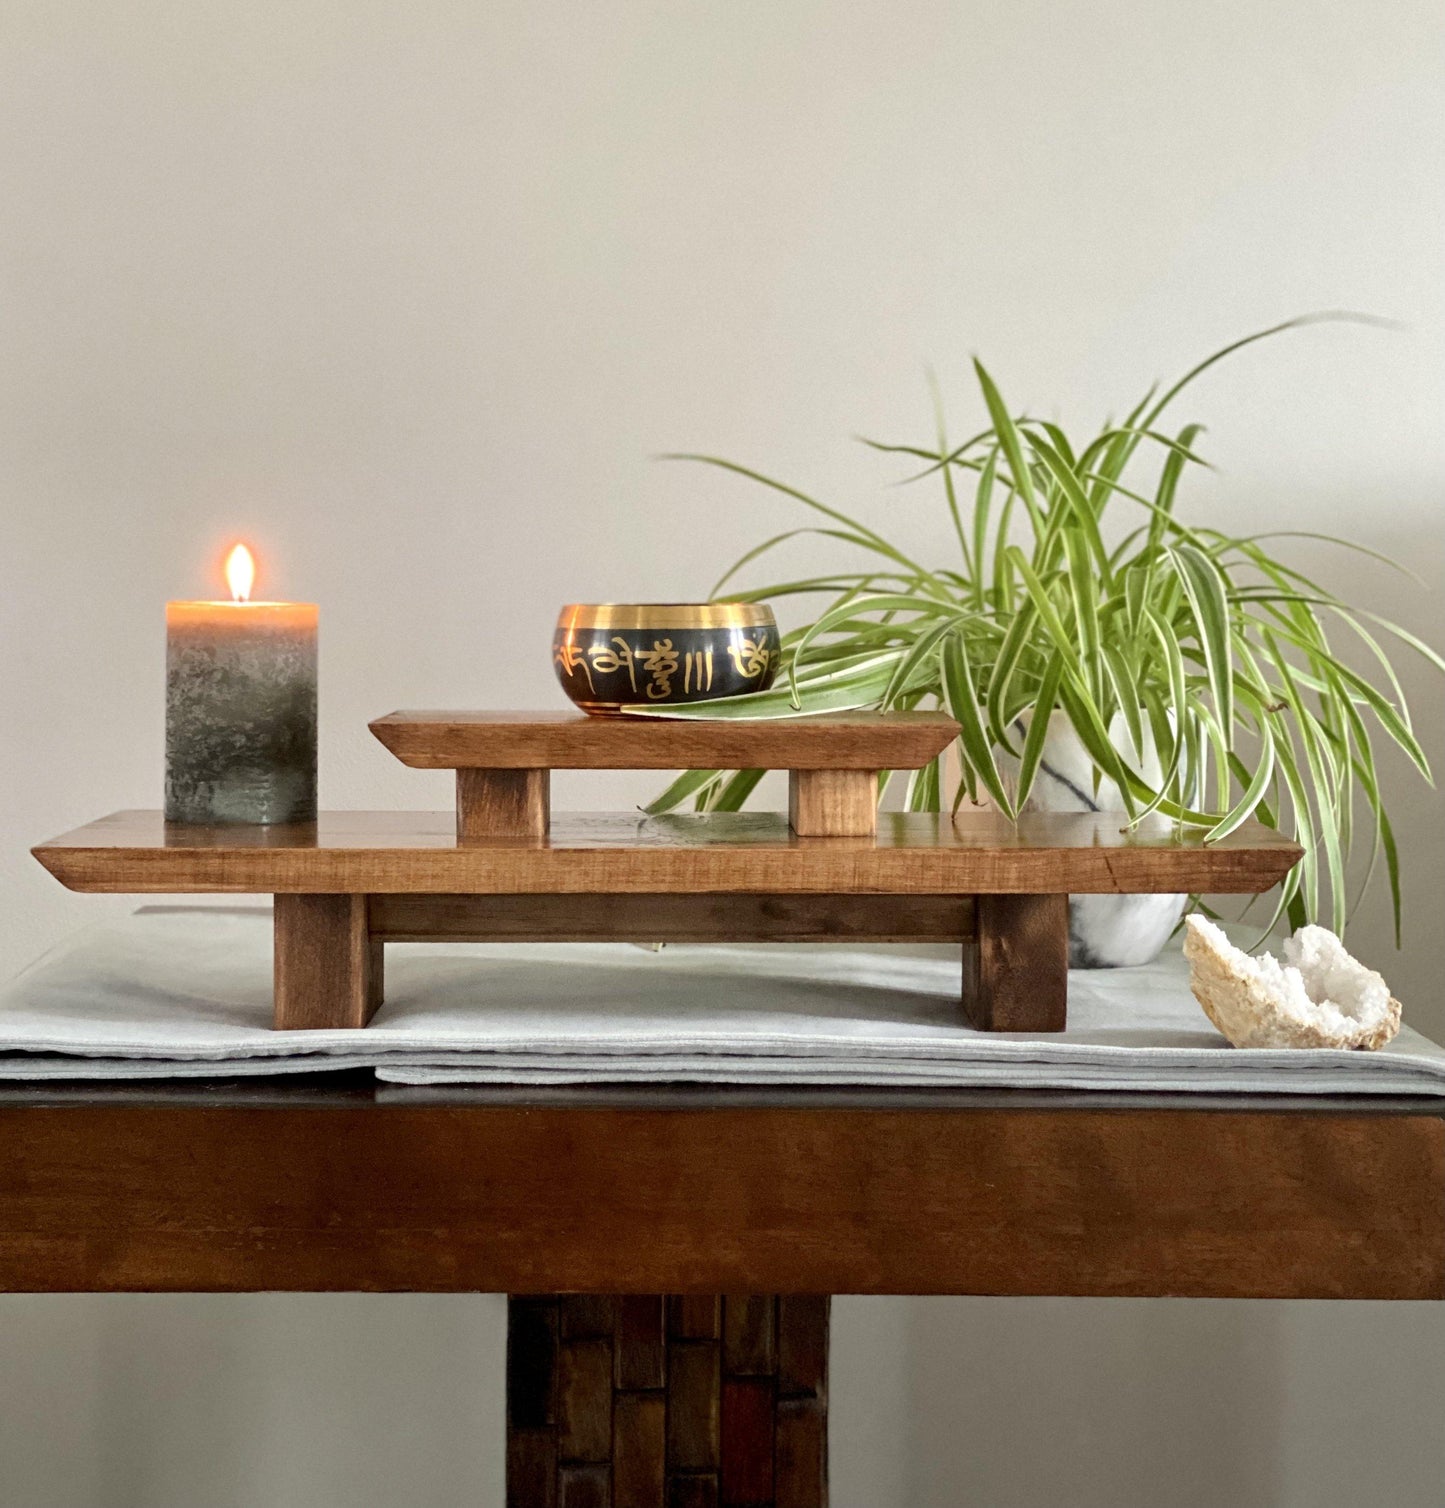 Meditation Altar Set - The Sankalpa Project